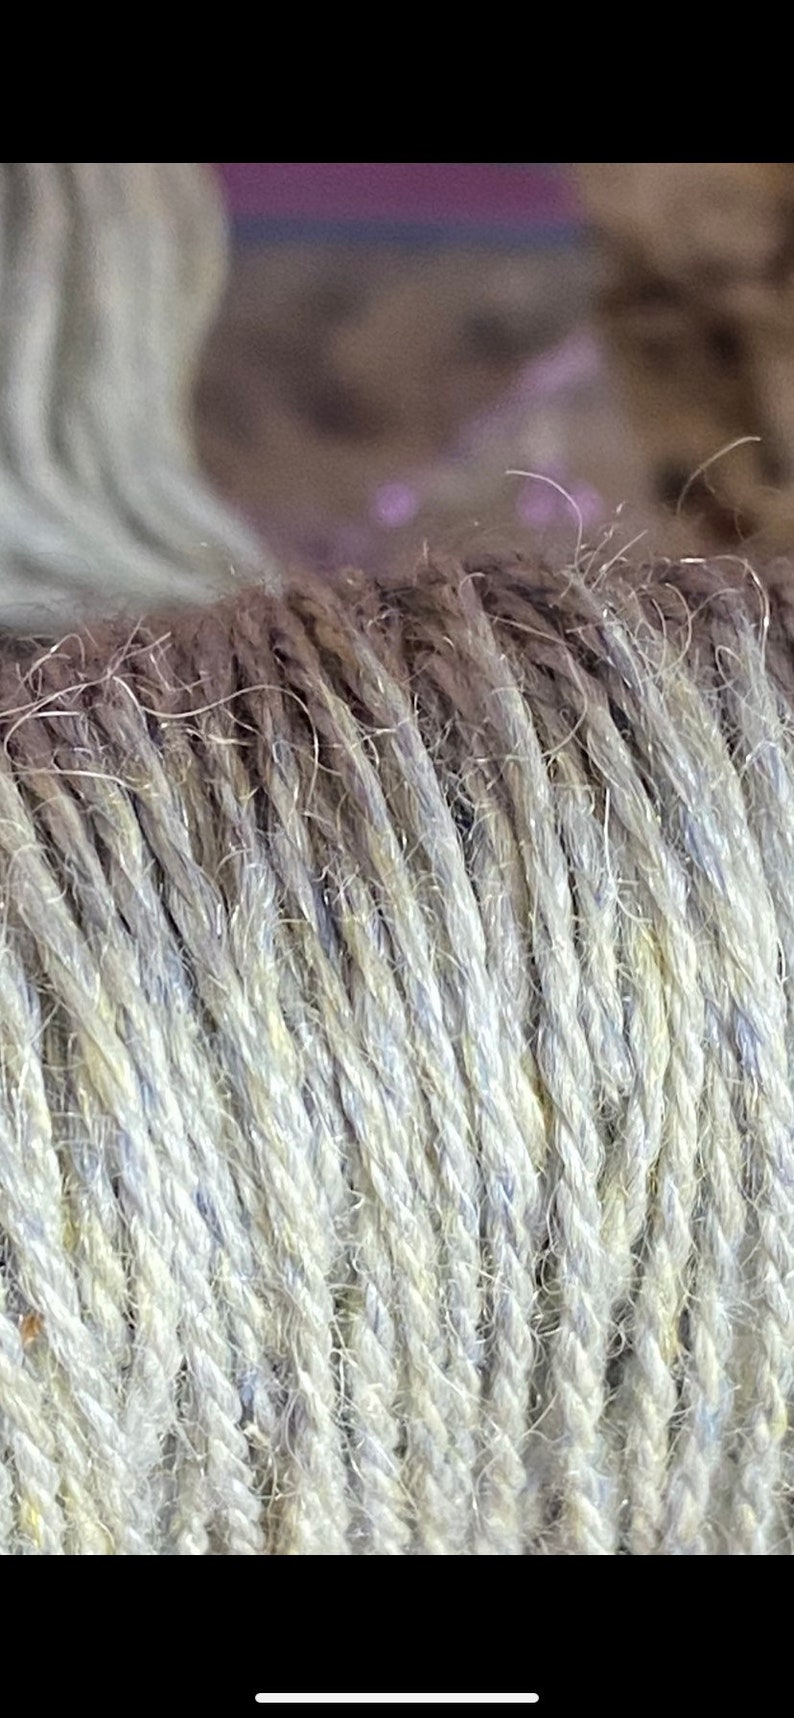 Alpaca with Midnight Blue & Yellow Mulberry Silks Fingering Yarn image 5